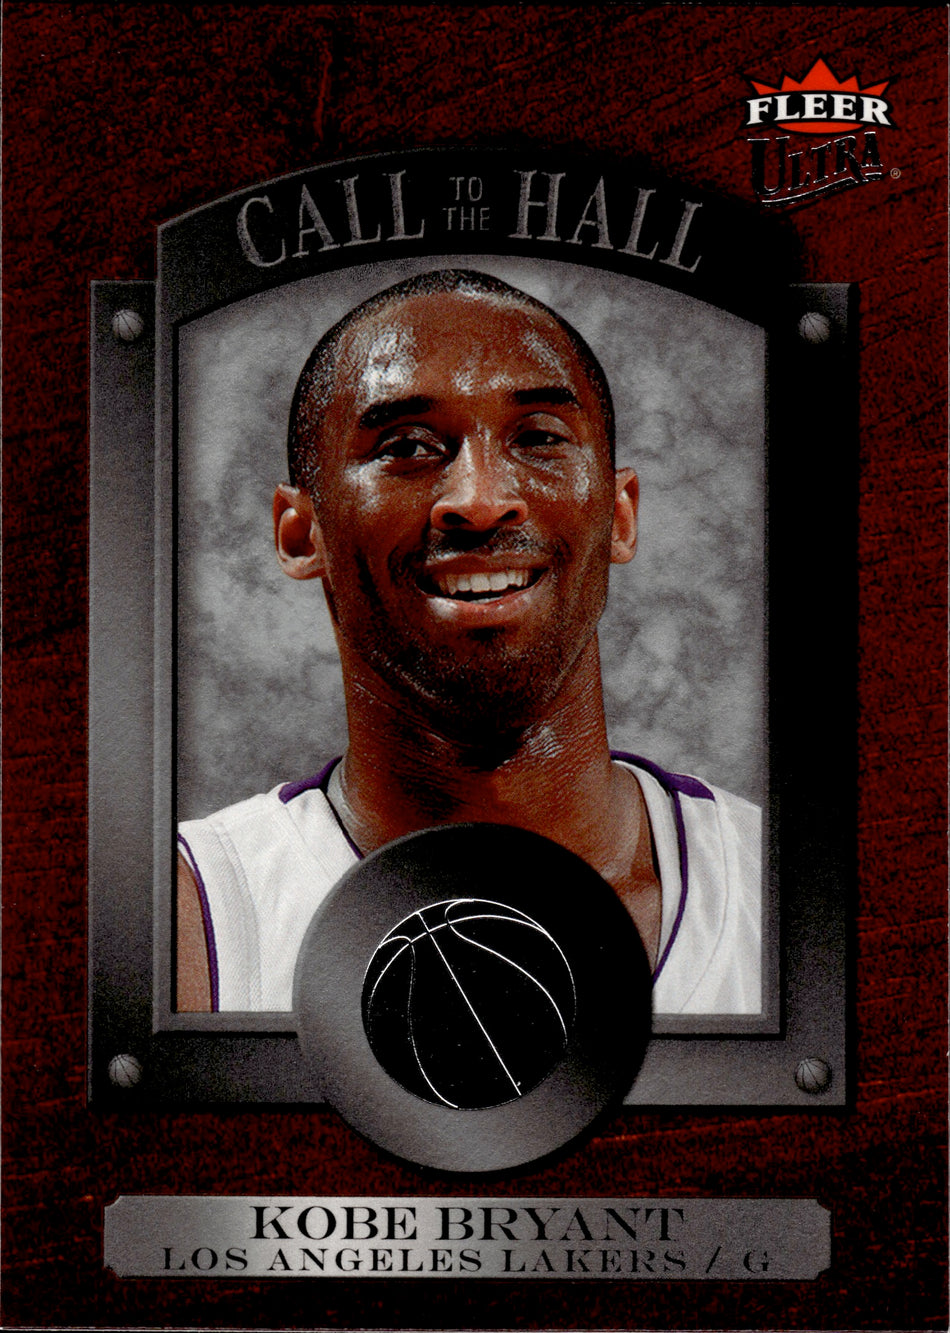 2007-08 Fleer Ultra Call to the Hall Kobe Bryant #CH-1